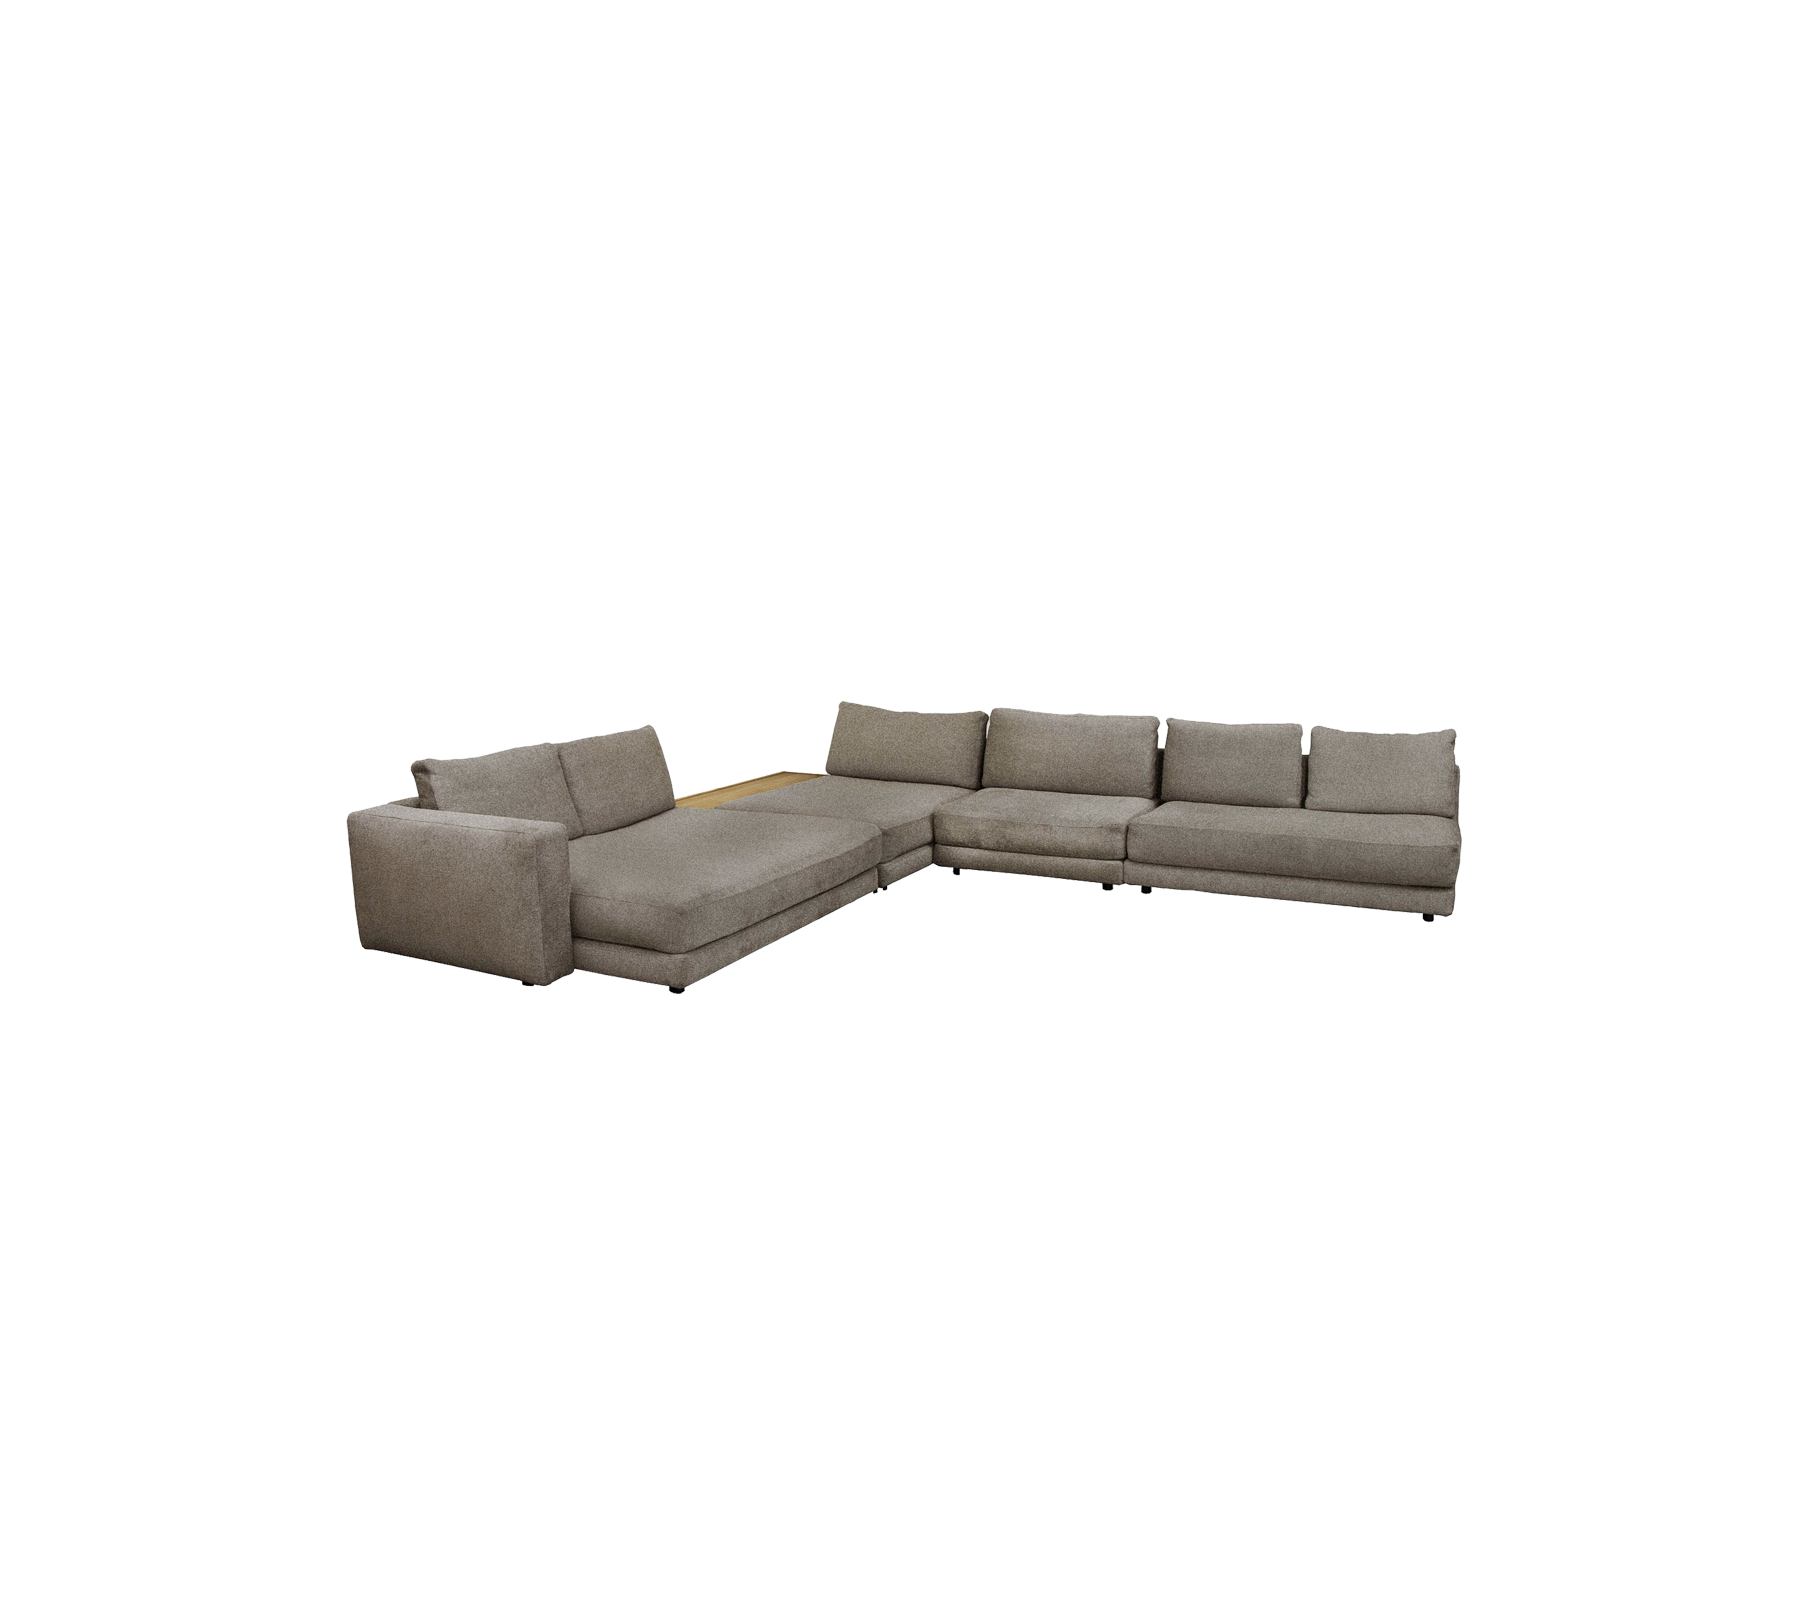 Scale Cane-line Wool, Fire Retardant (Crib 5), Corner sofa w/armrest & table (8.1)